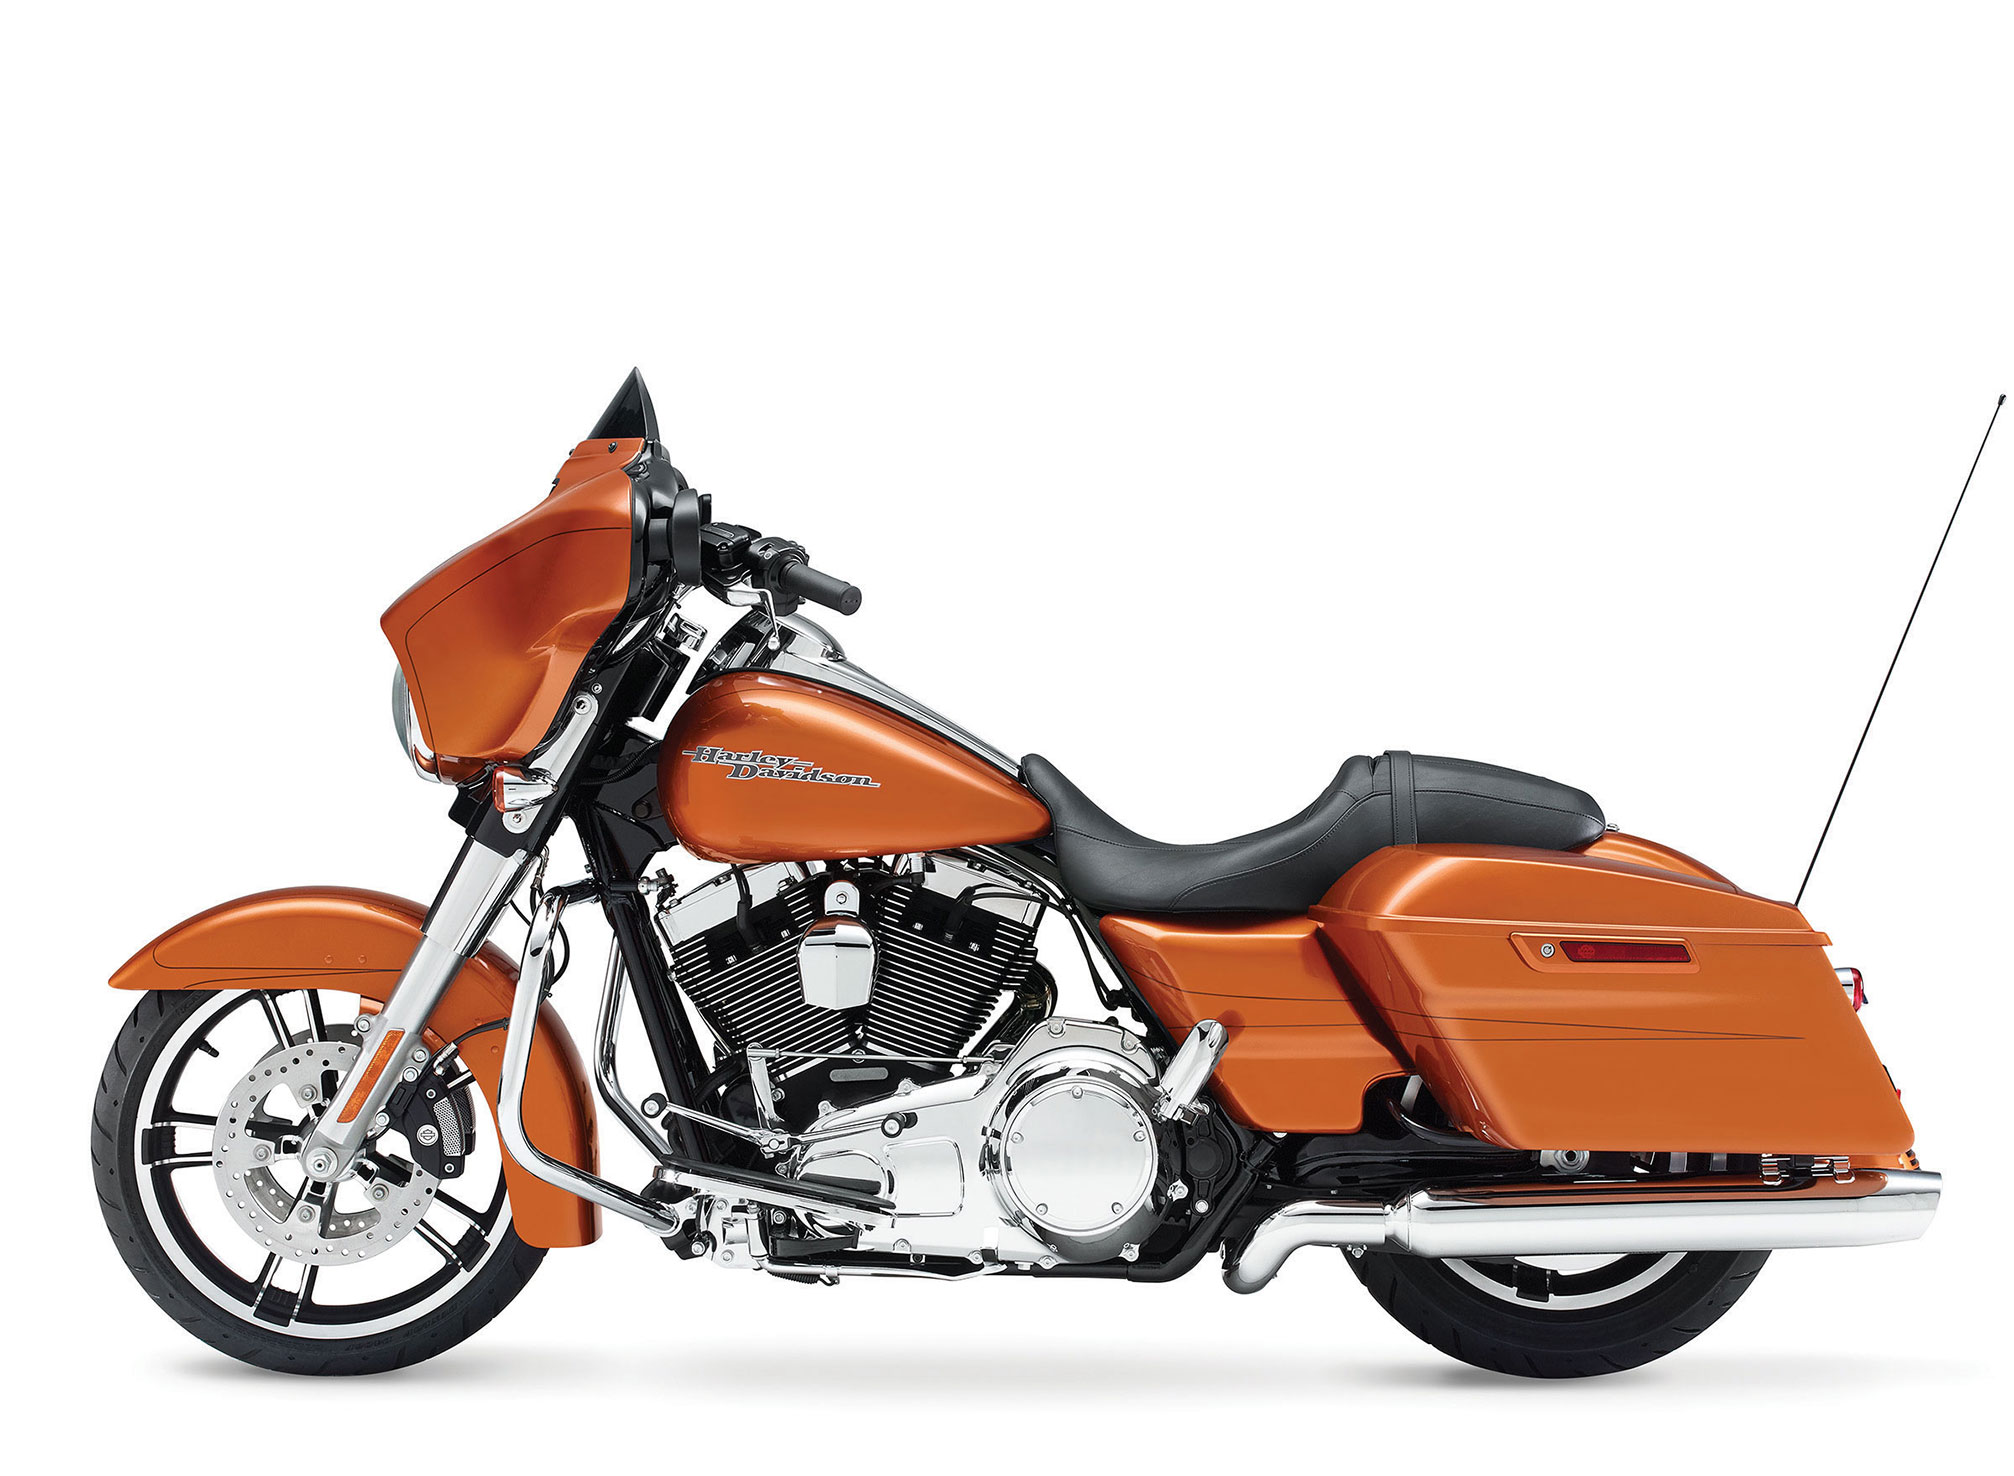 2014 Harley Davidson Flhxs Street Glide Special Review